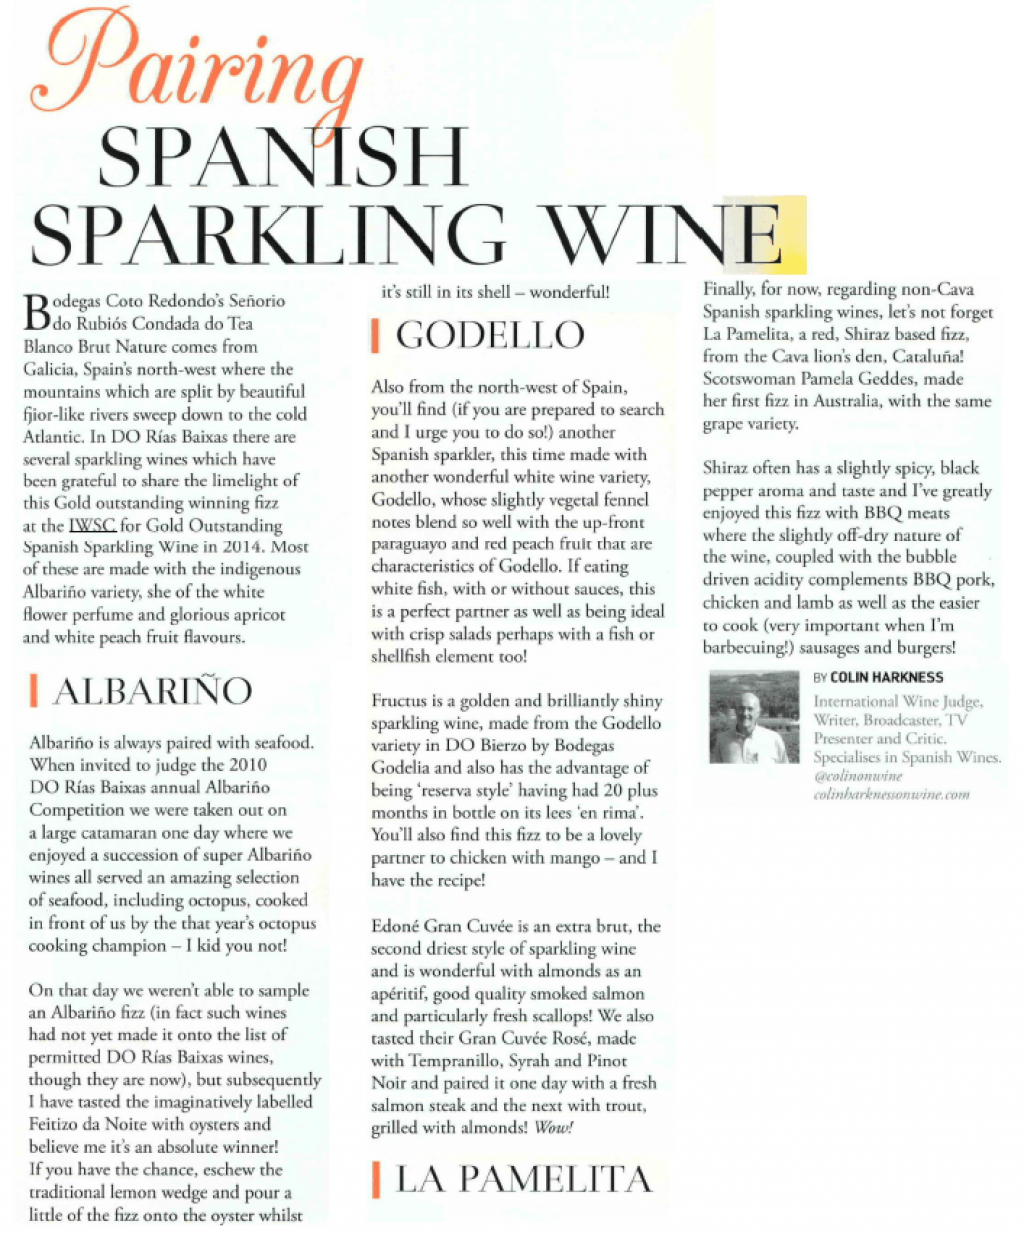 Pairing Spanish Sparkling Wine